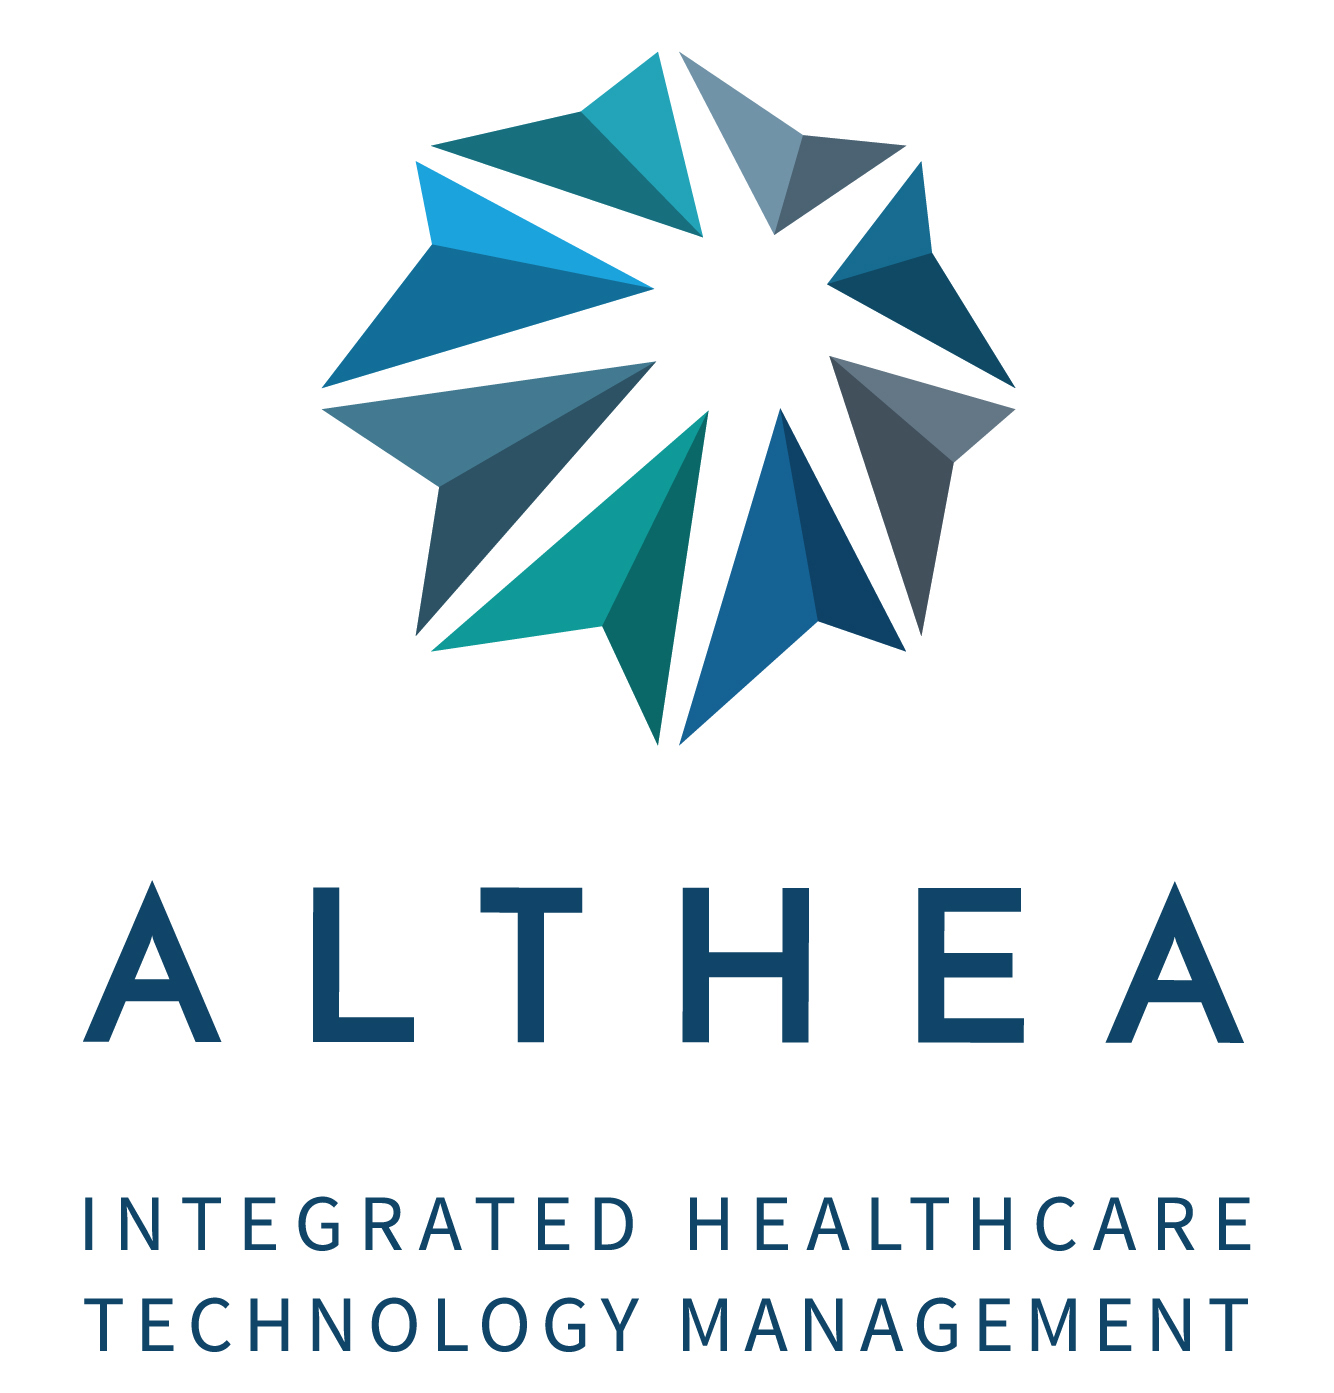 ALTHEA HEALTHCARE